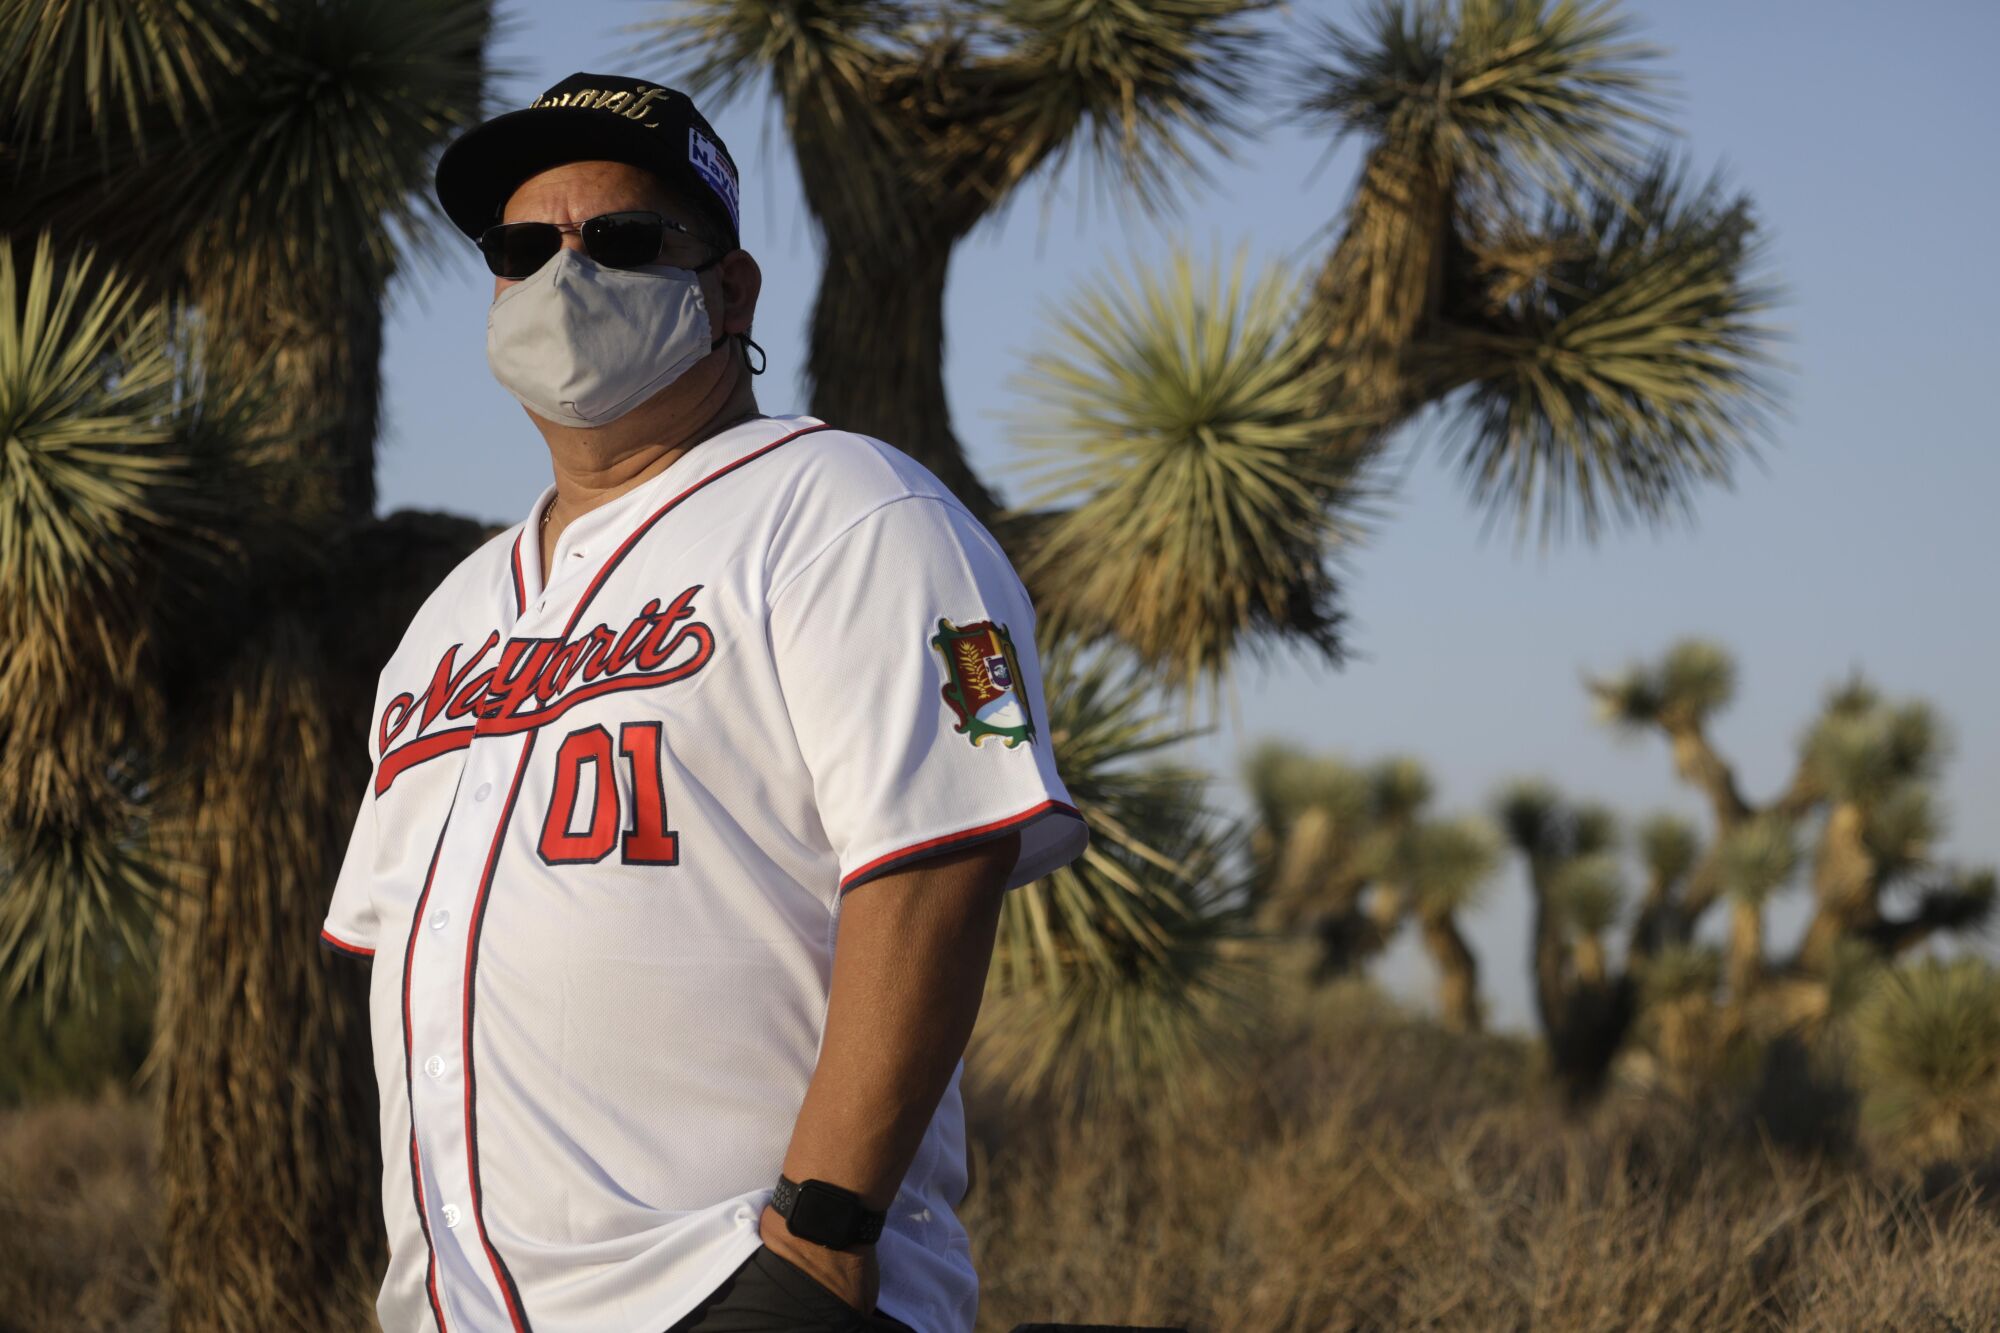 A man in a baseball jersey stands near Joshua trees